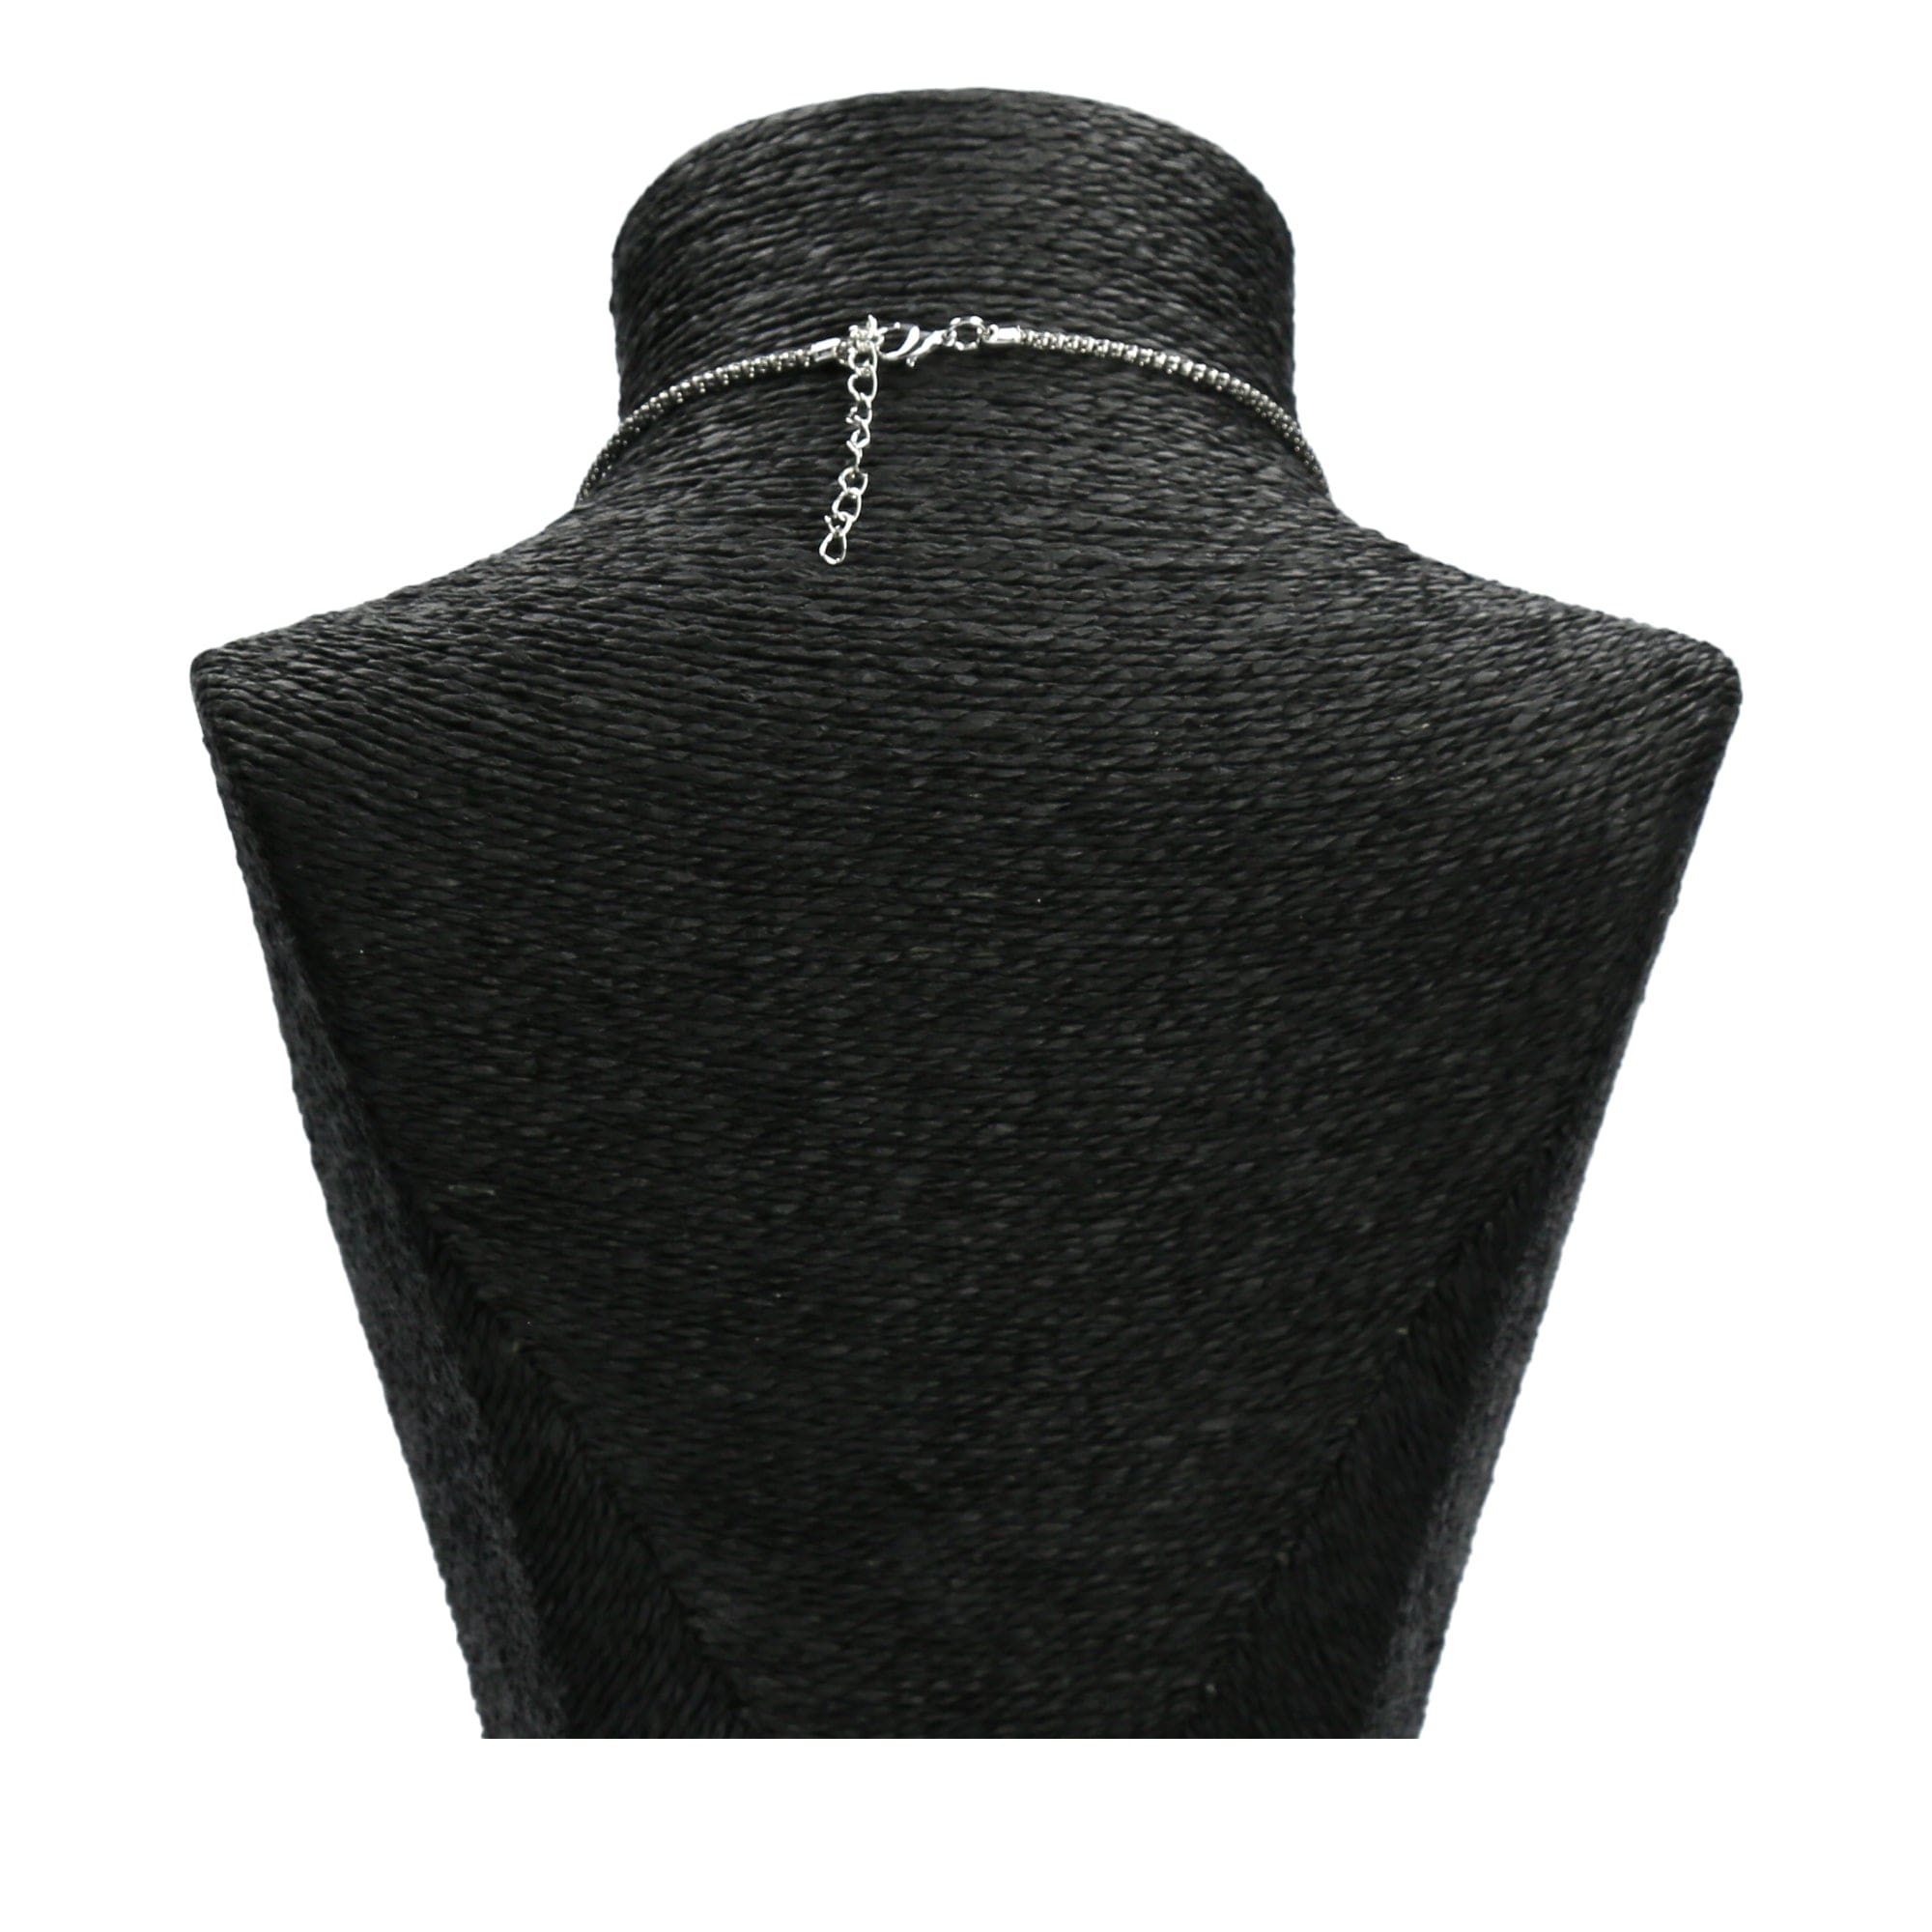 Niarina smyckesset - Halsband